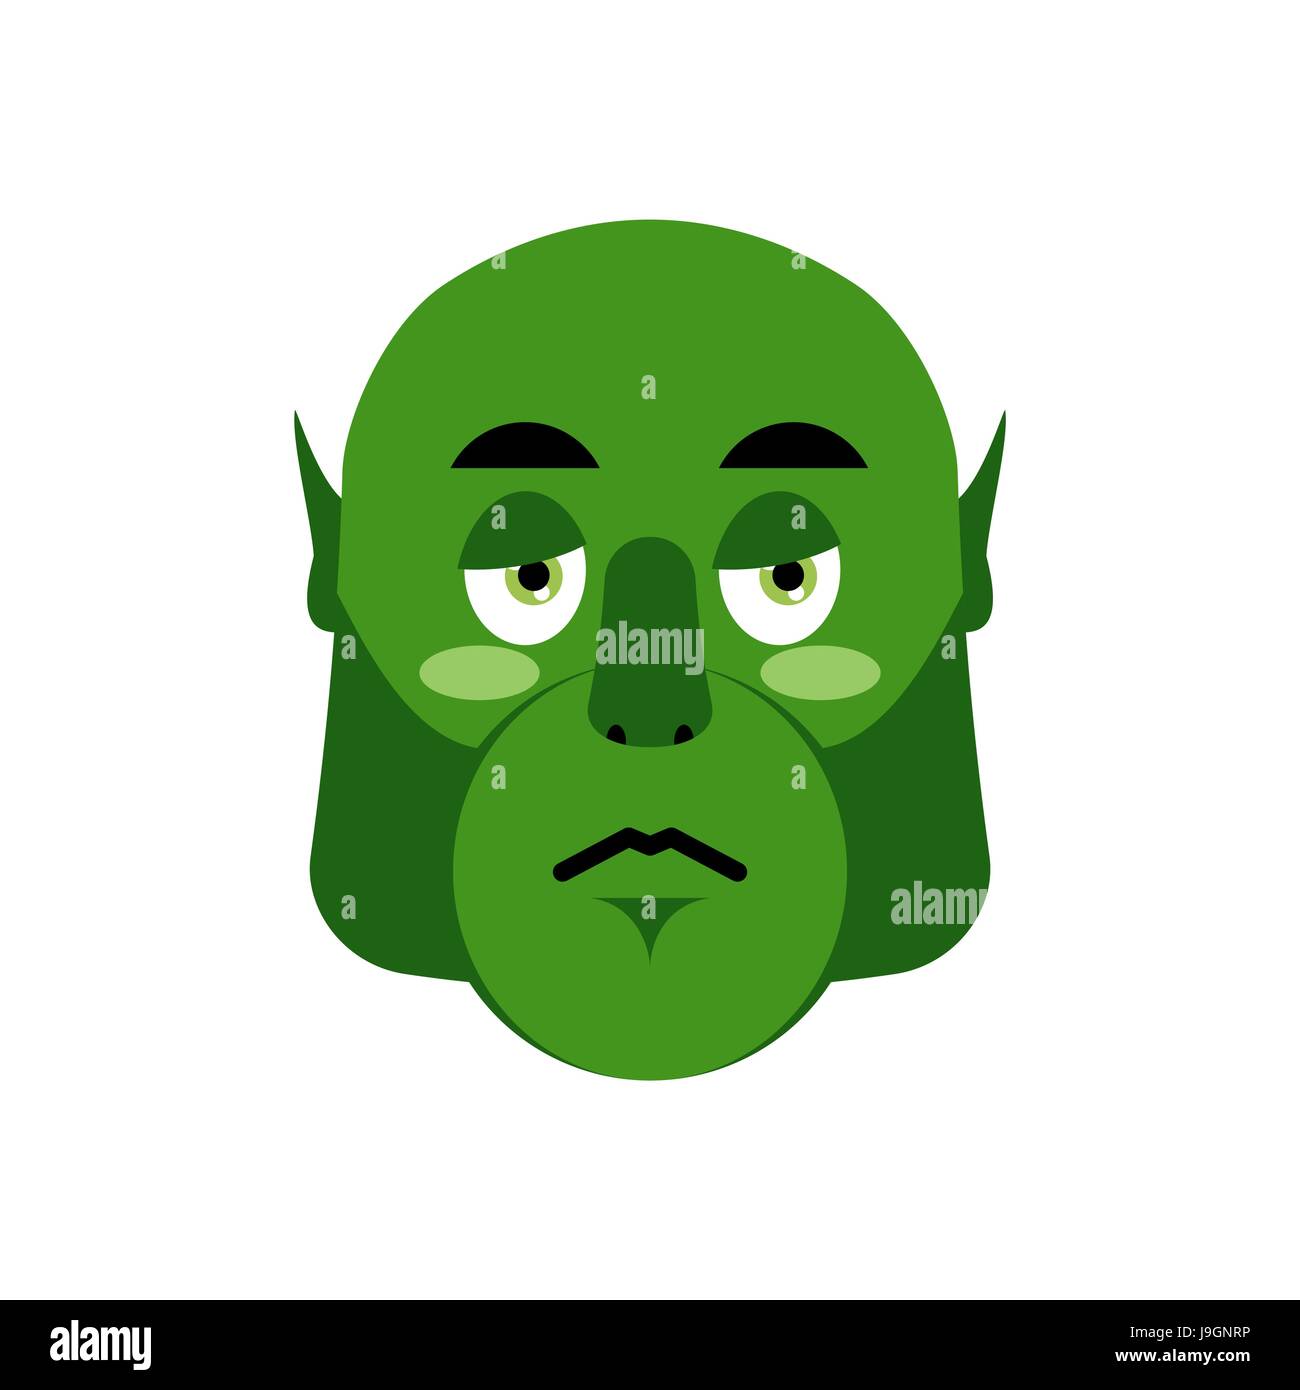 sad troll face | Kids T-Shirt